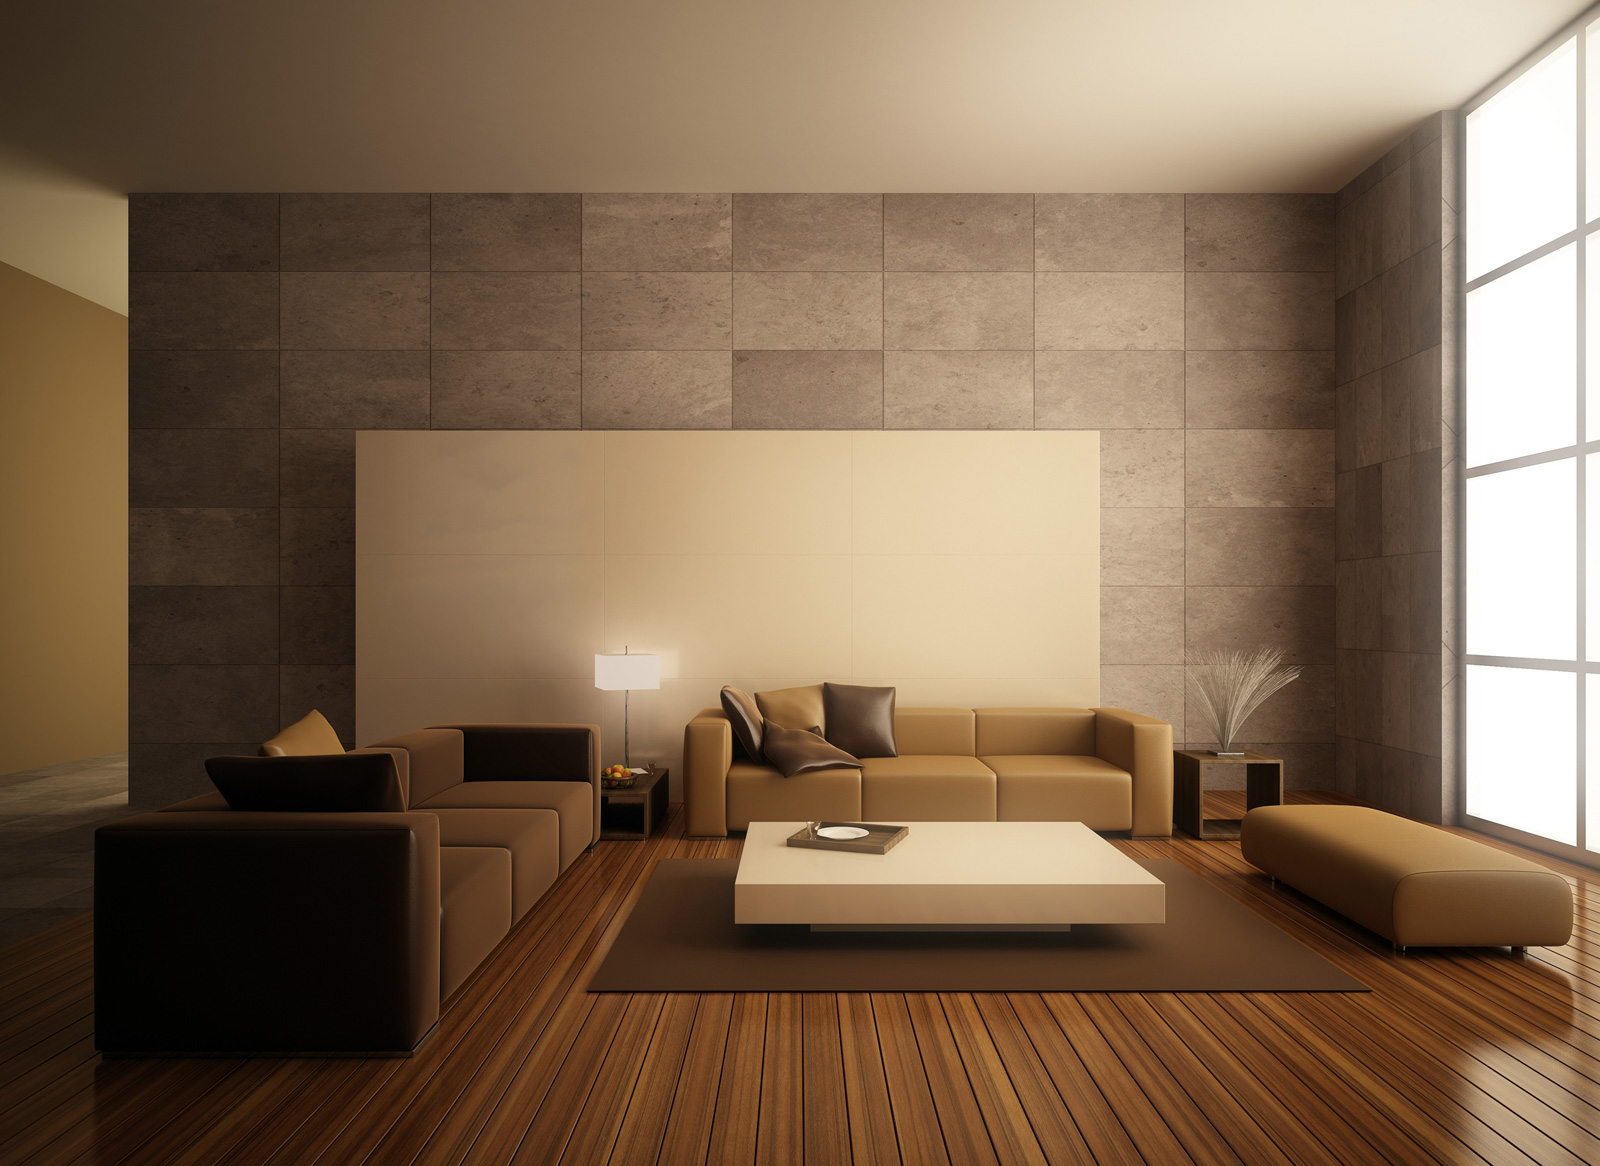 16 breathtaking minimalist interior design ideas for Case minimal design